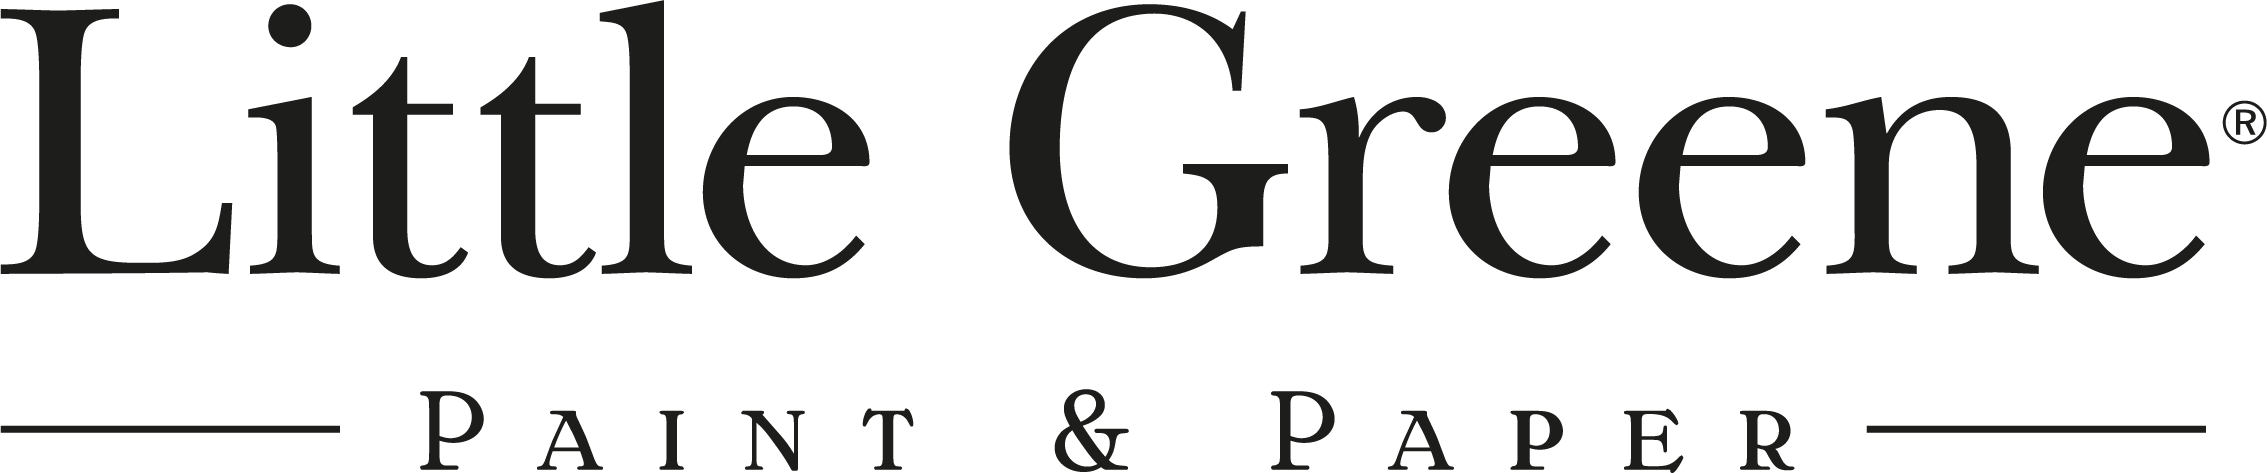 Little Greene Logo